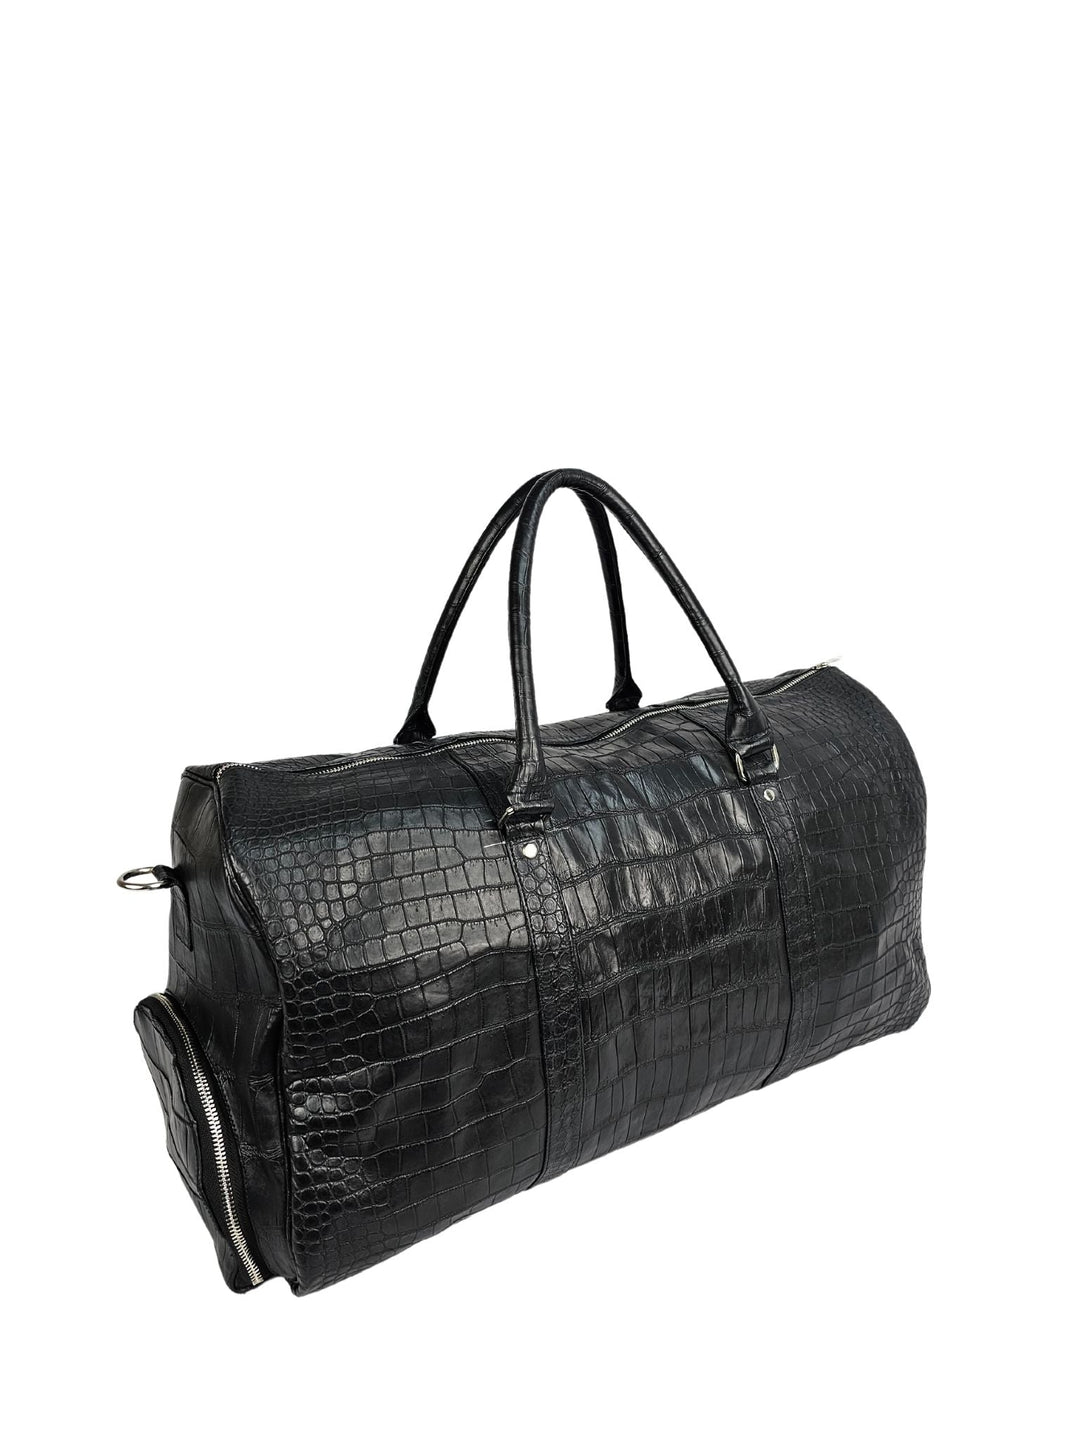 XXL Black Alligator Duffle Bag by Maison Kingsley